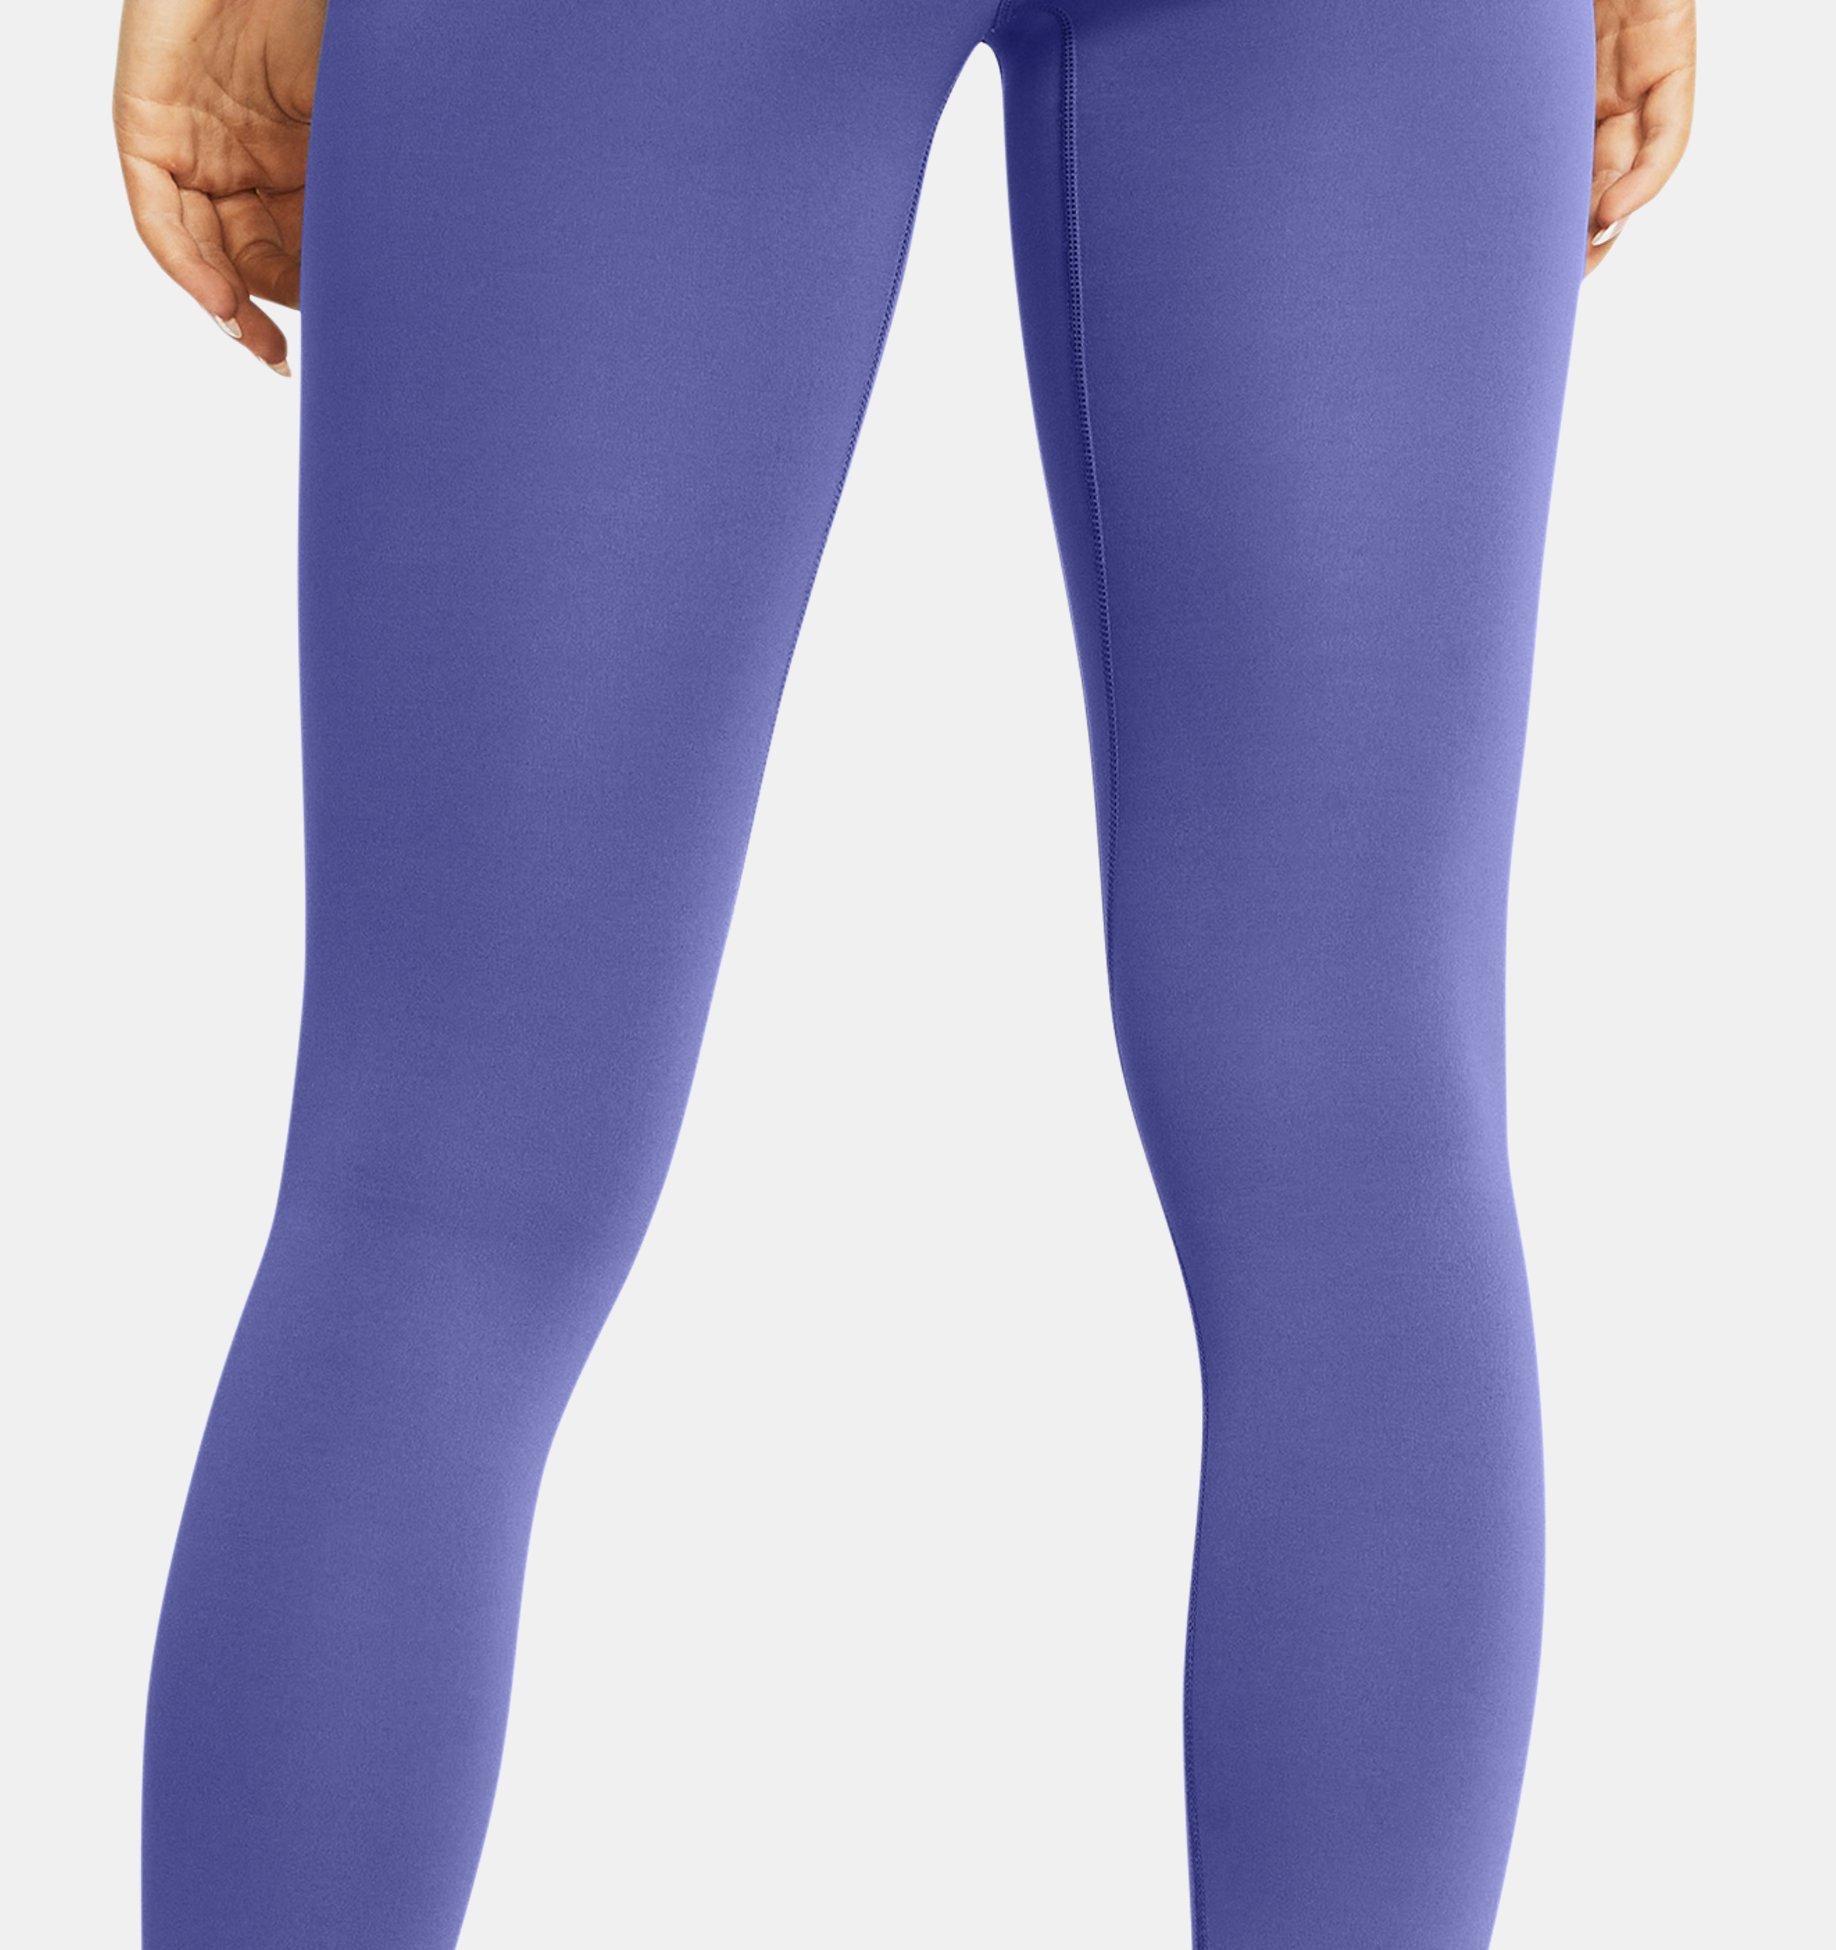  Meridian CW Legging, Purple - women's leggings - UNDER  ARMOUR - 52.51 € - outdoorové oblečení a vybavení shop